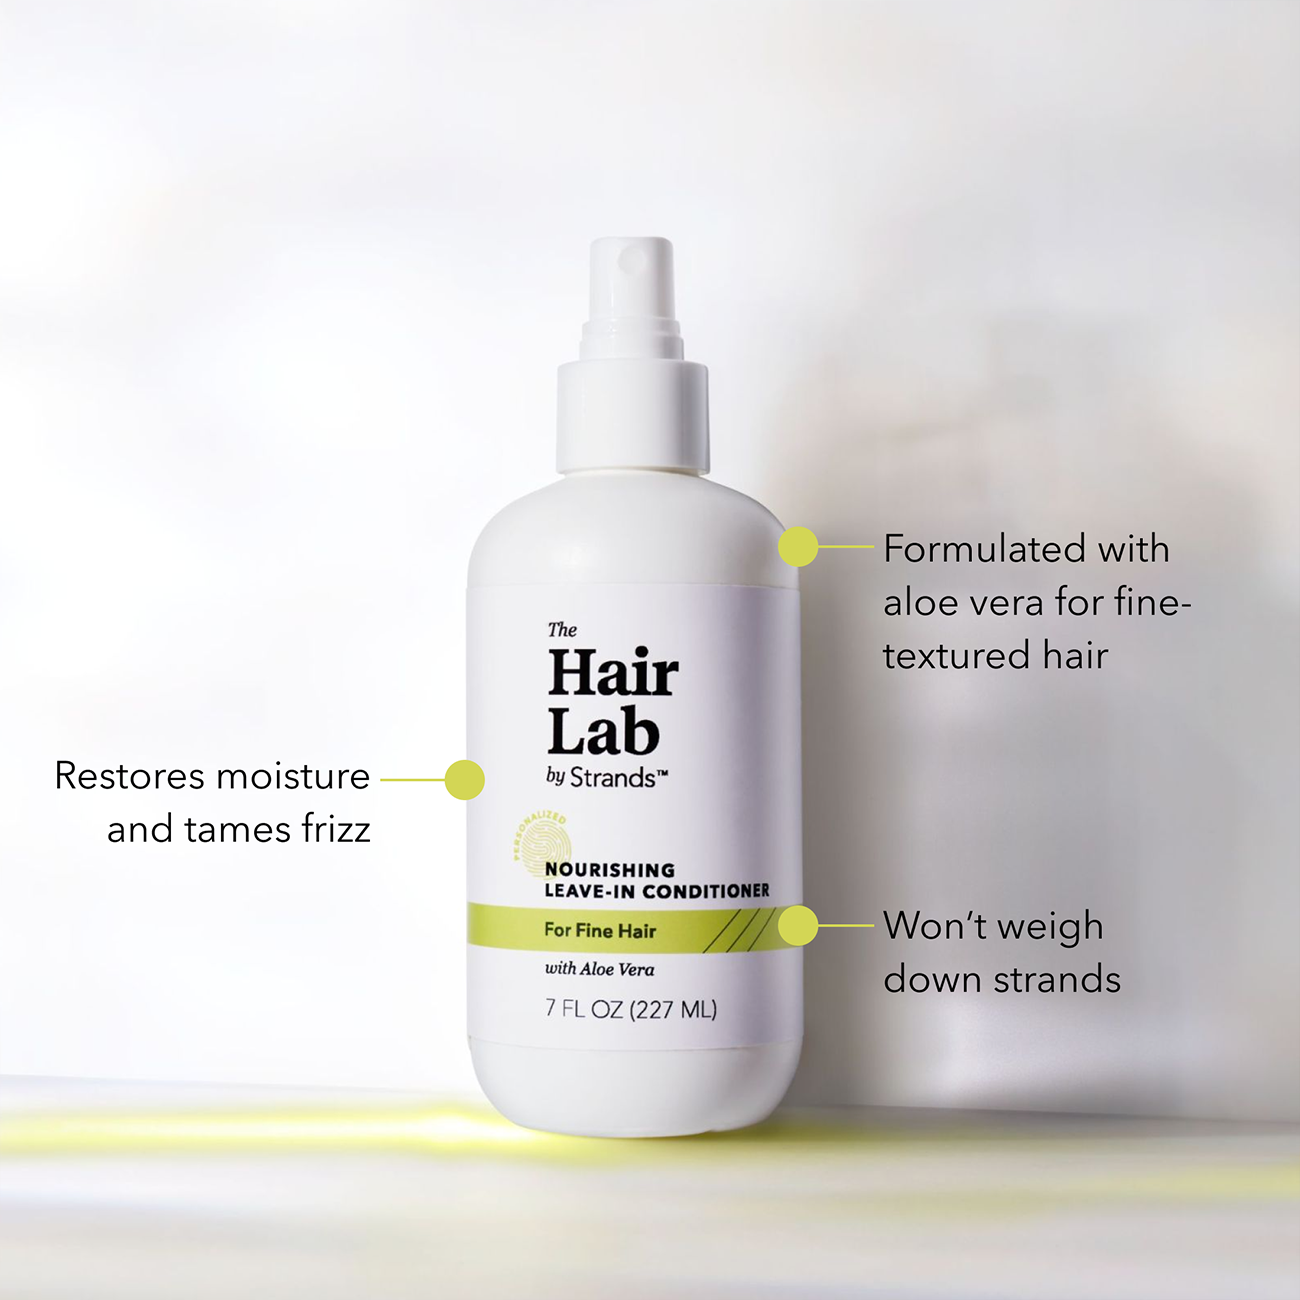 Custom Hair Care Based on Hair Biology – The Hair Lab by Strands